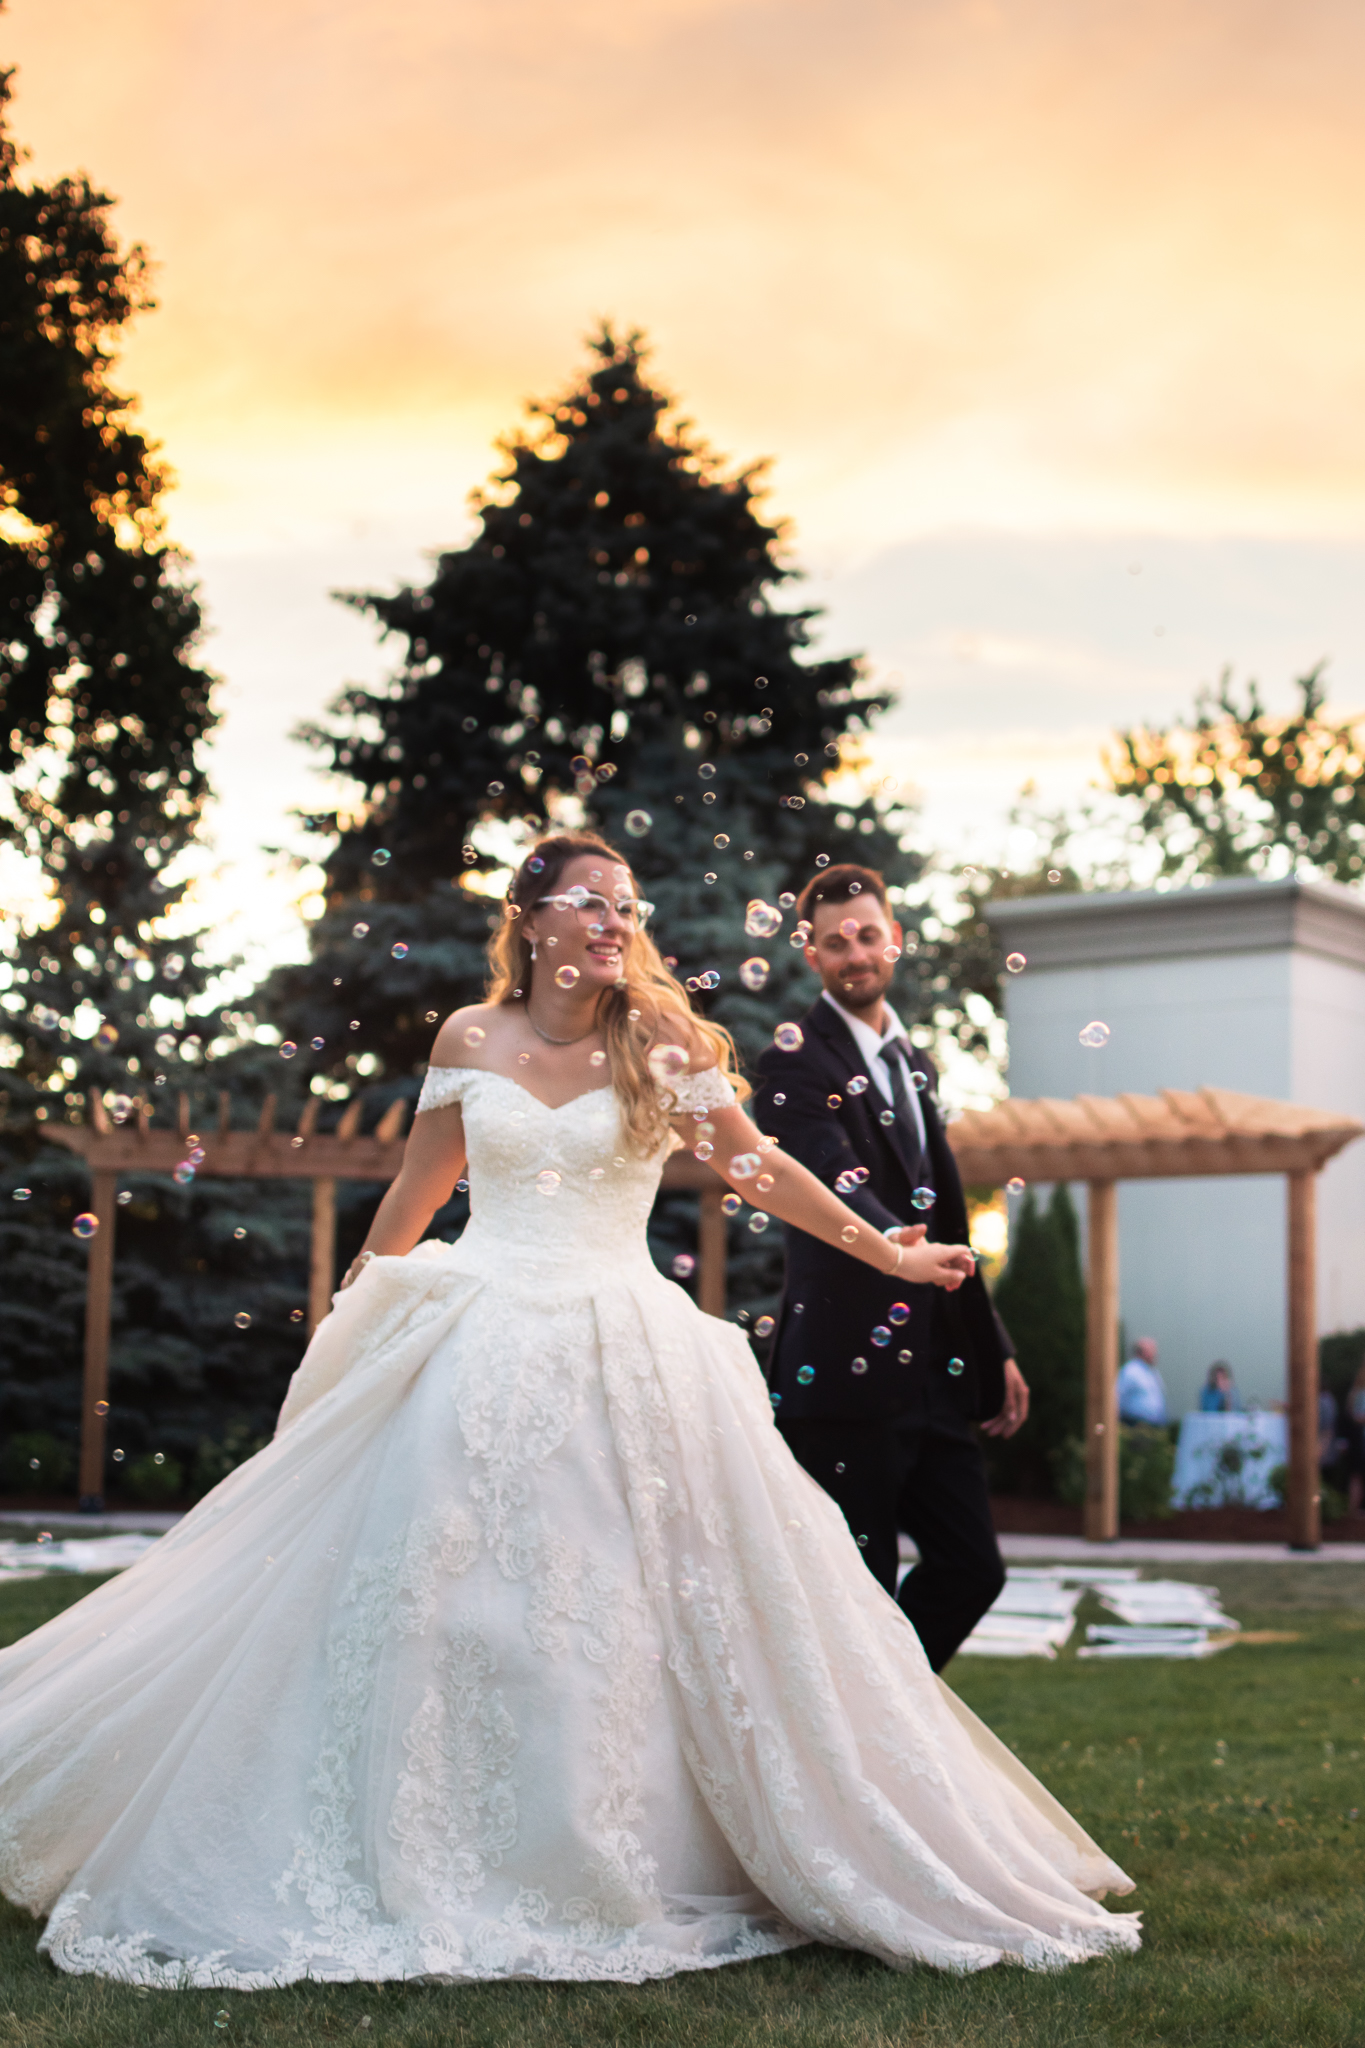 bride and groom dancing in bubbles at outdoor wedding venues chicago